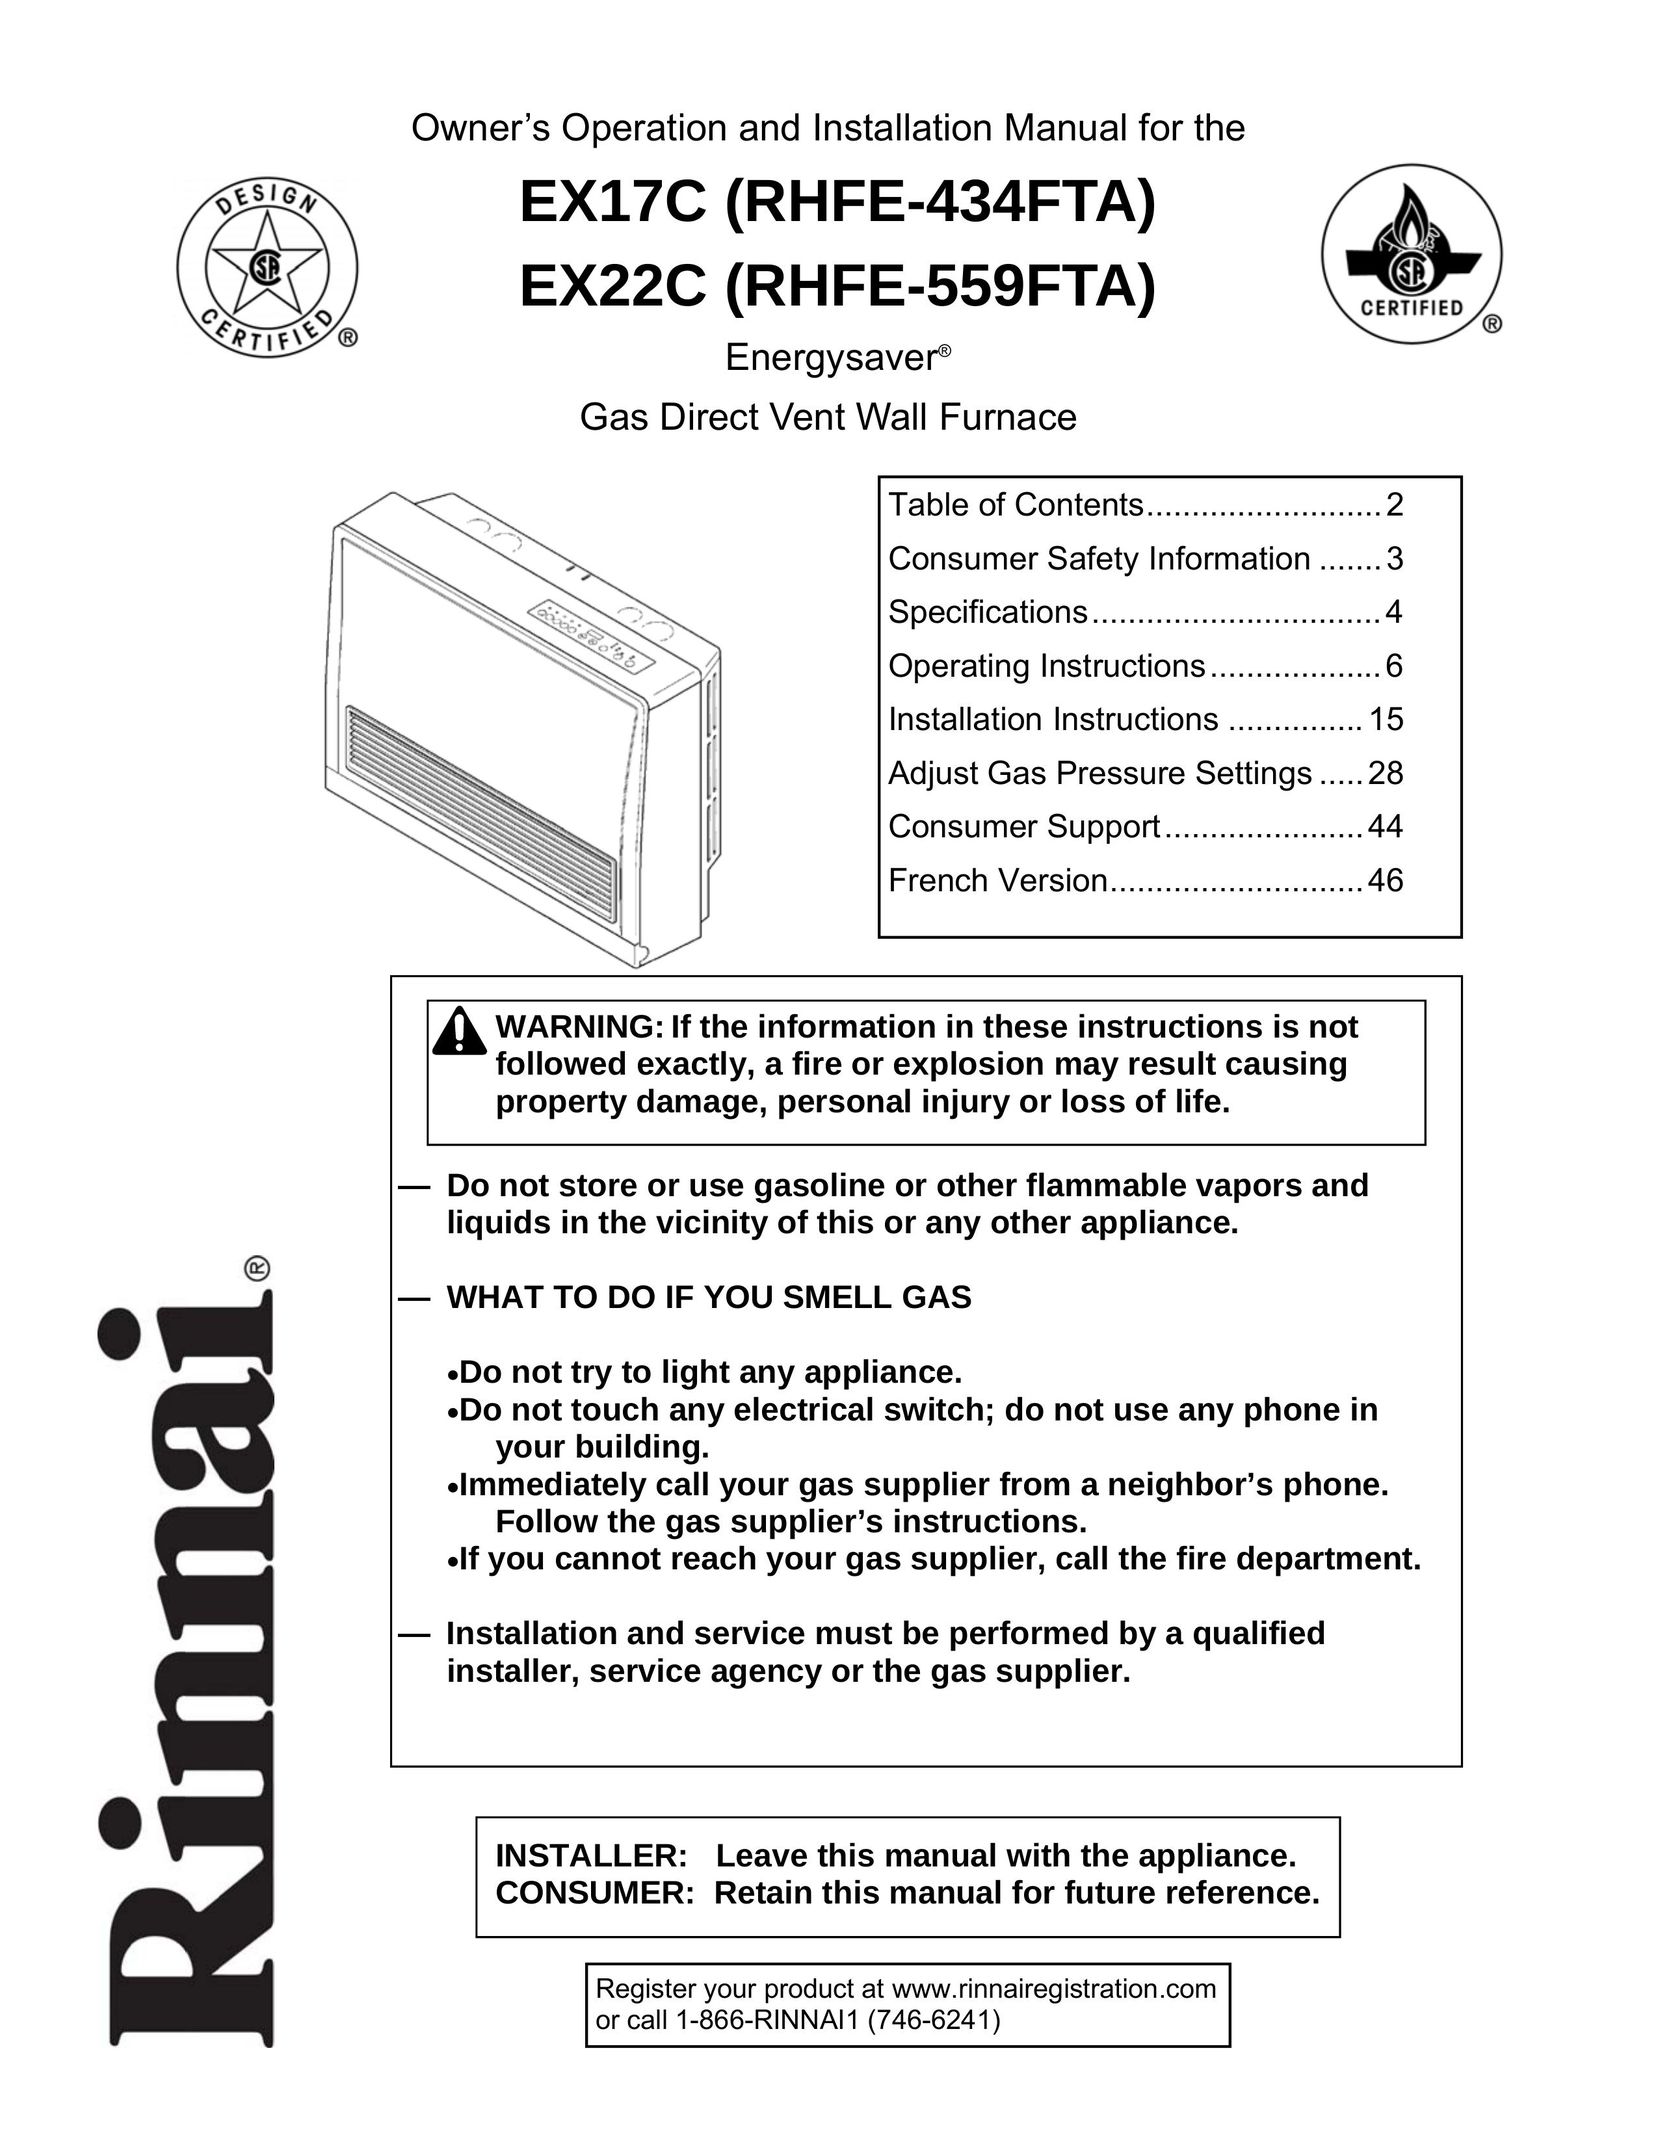 Rinnai EX22C Furnace User Manual